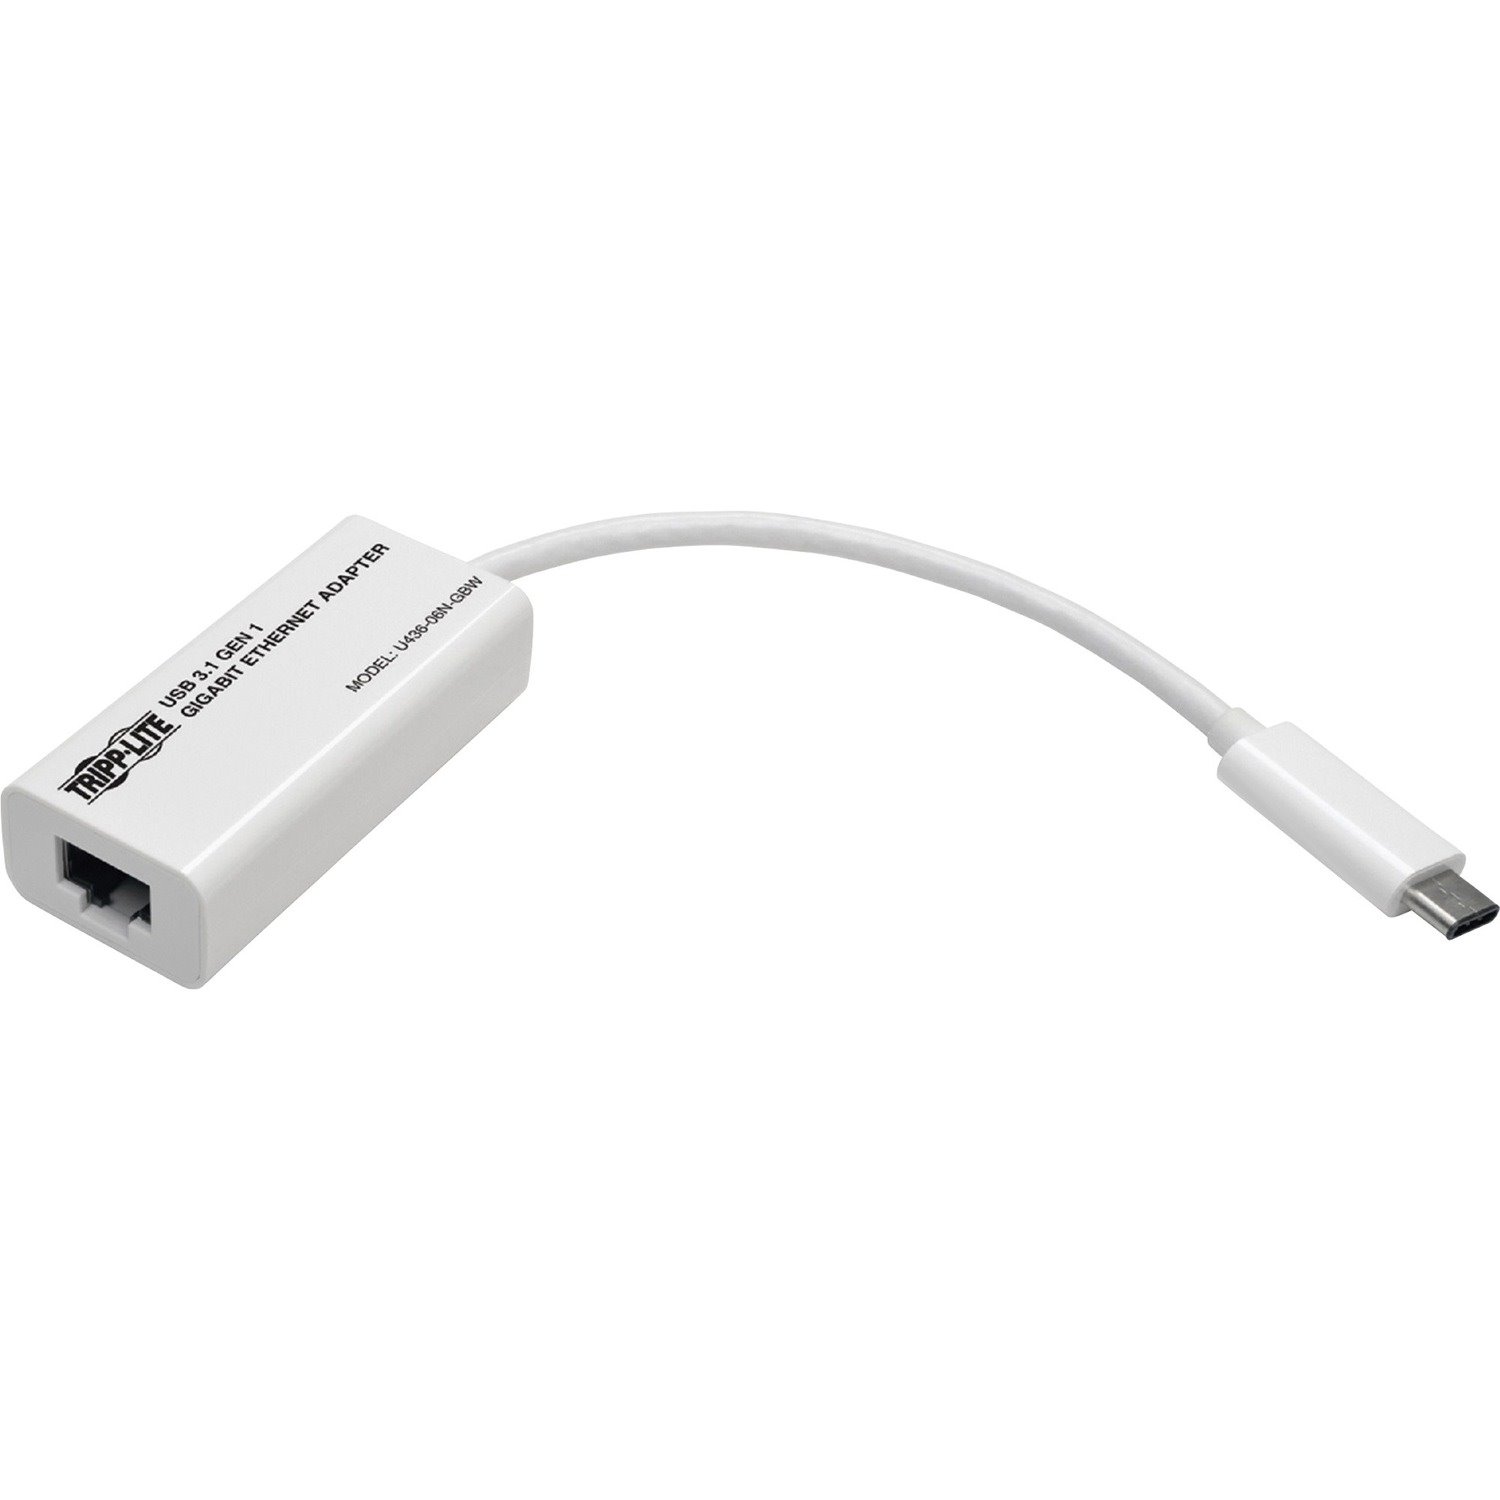 Eaton Tripp Lite Series USB-C to Gigabit Network Adapter, Thunderbolt 3 Compatibility - White